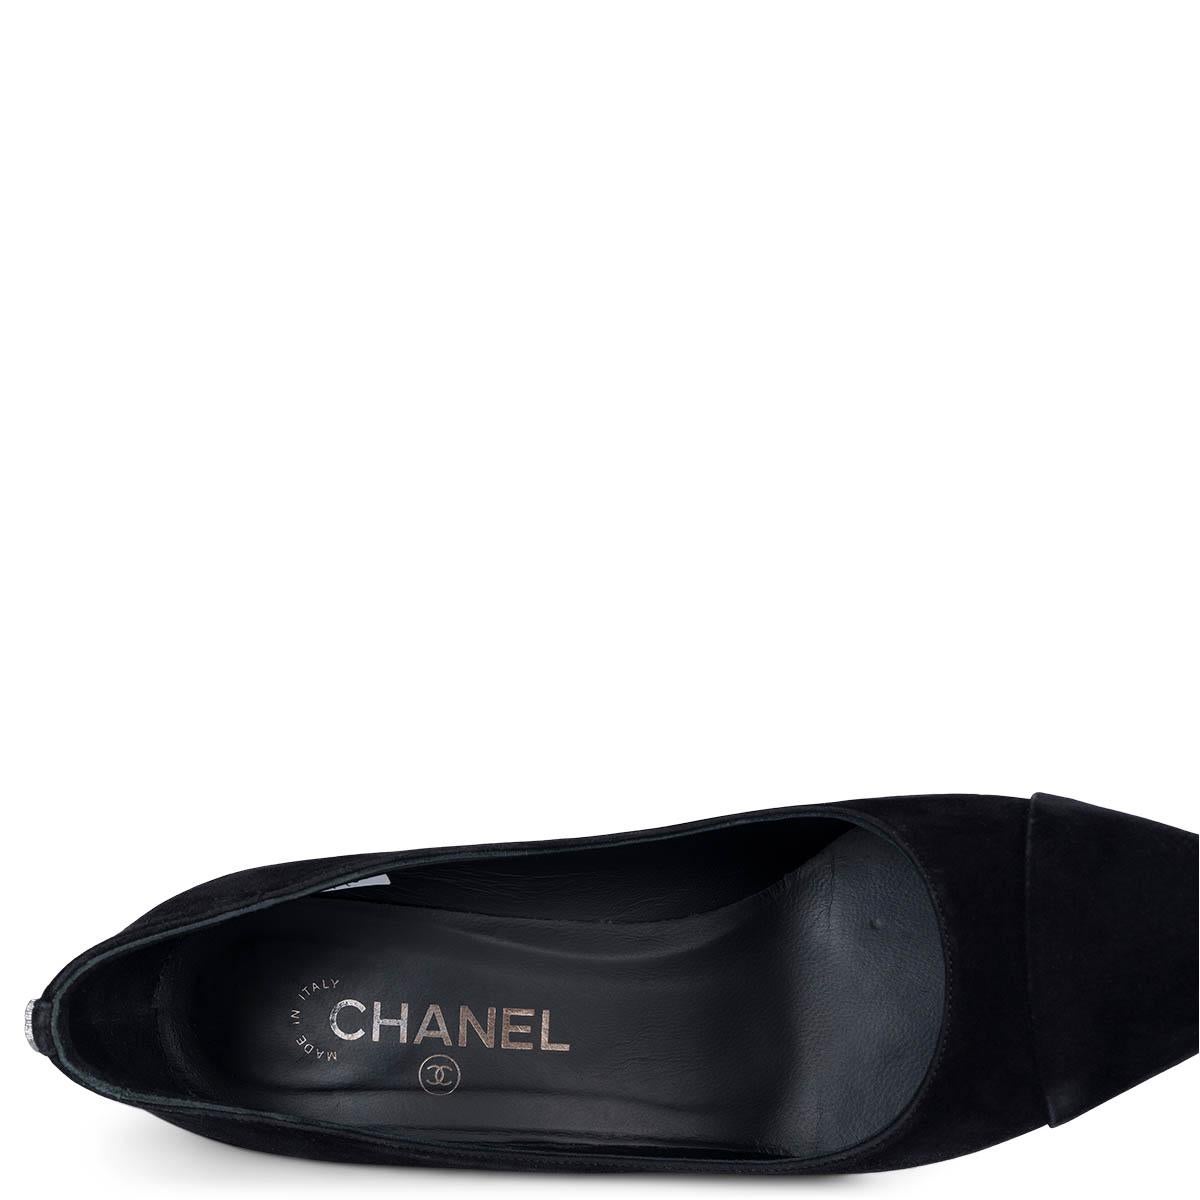 CHANEL black suede POINTE TOE Pumps Shoes 38.5 For Sale 3